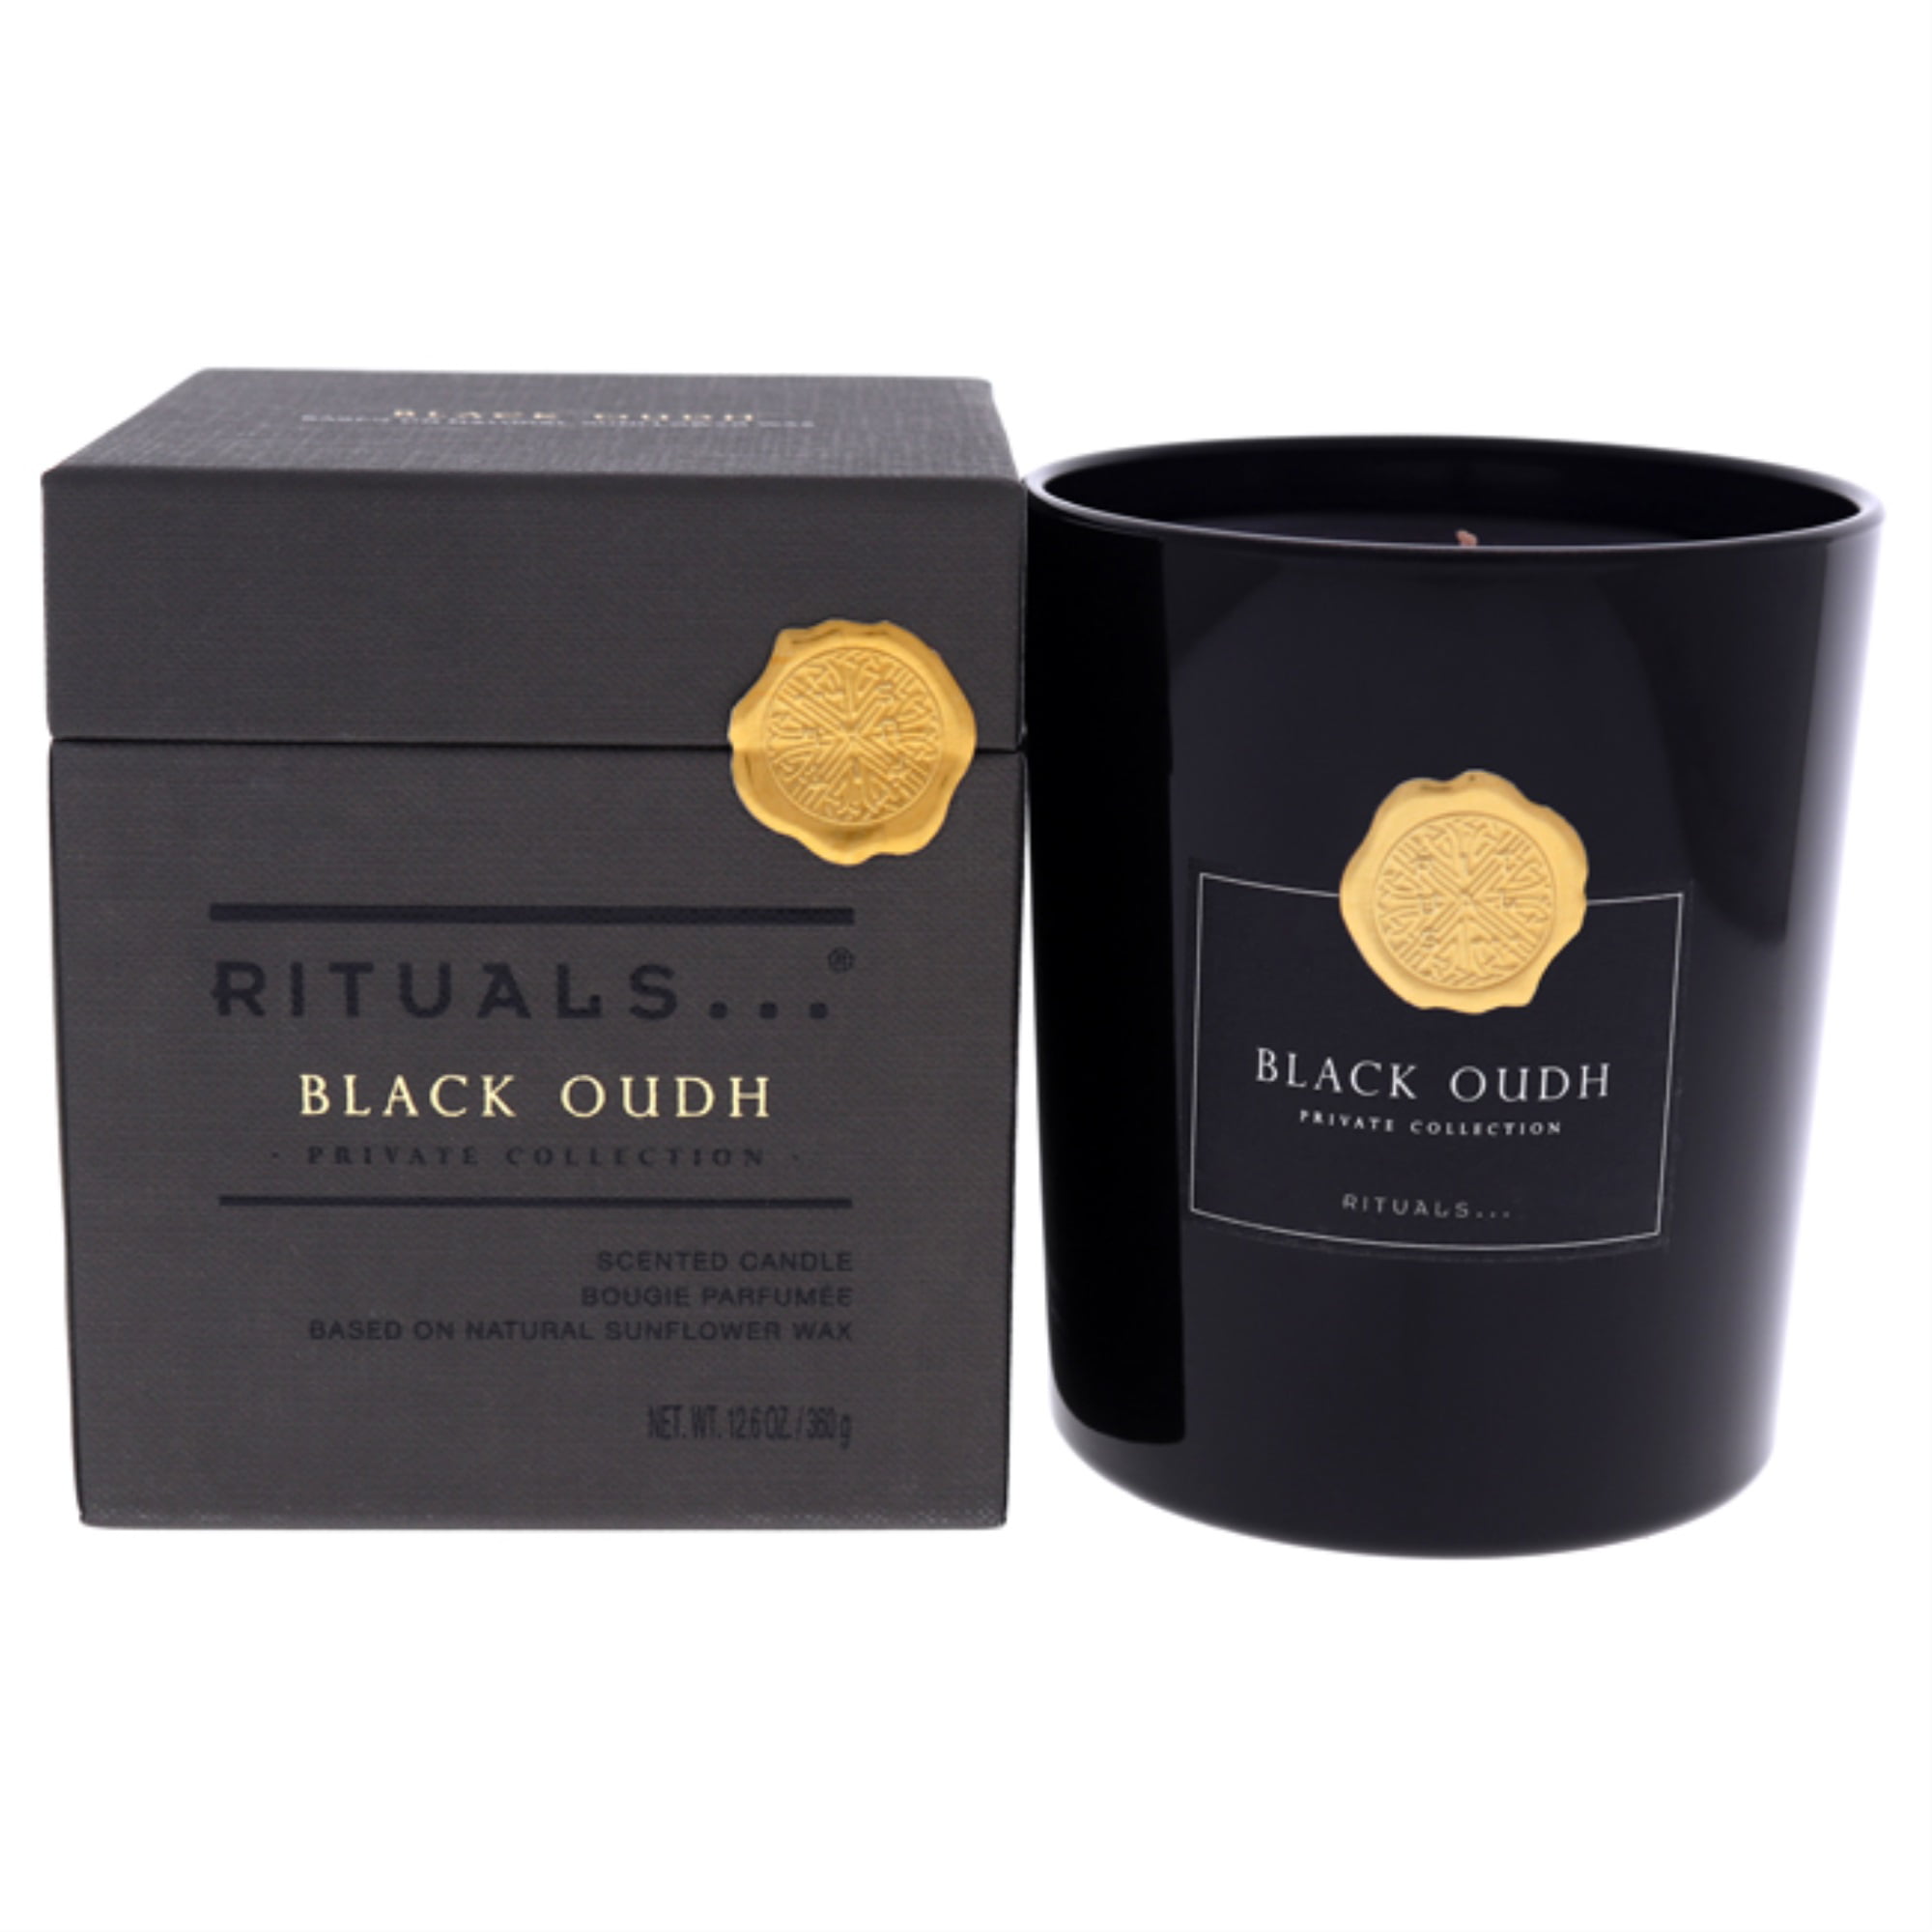  RITUALS Black Oudh Luxury Home Decor Candle - 12.6 Oz